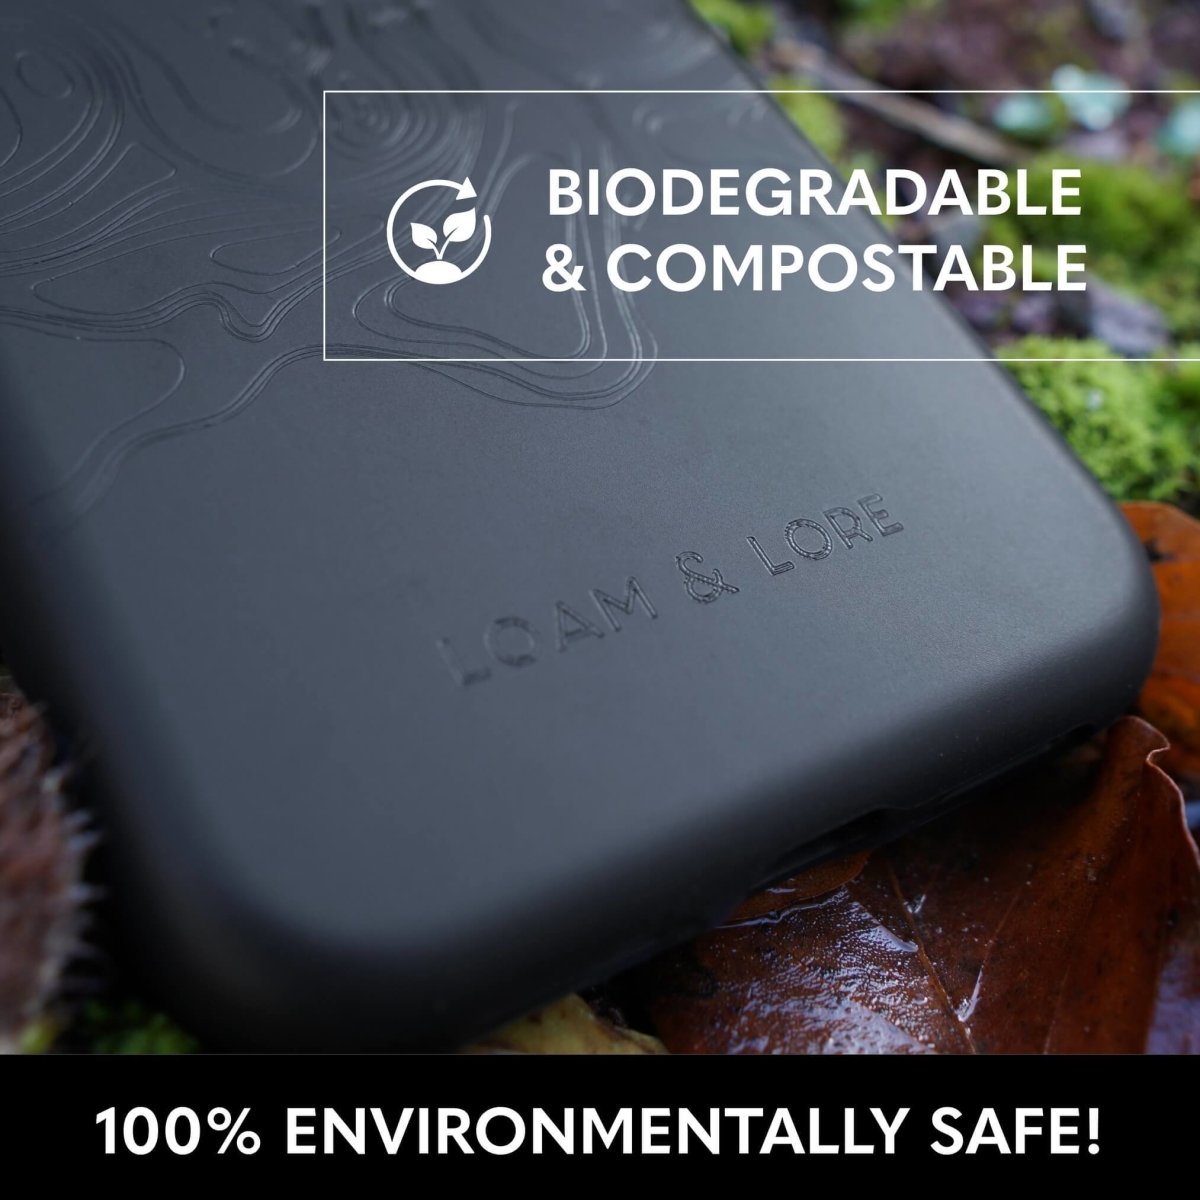 Sale - Biodegradable iPhone 11 Pro Max Case - Loam & Lore